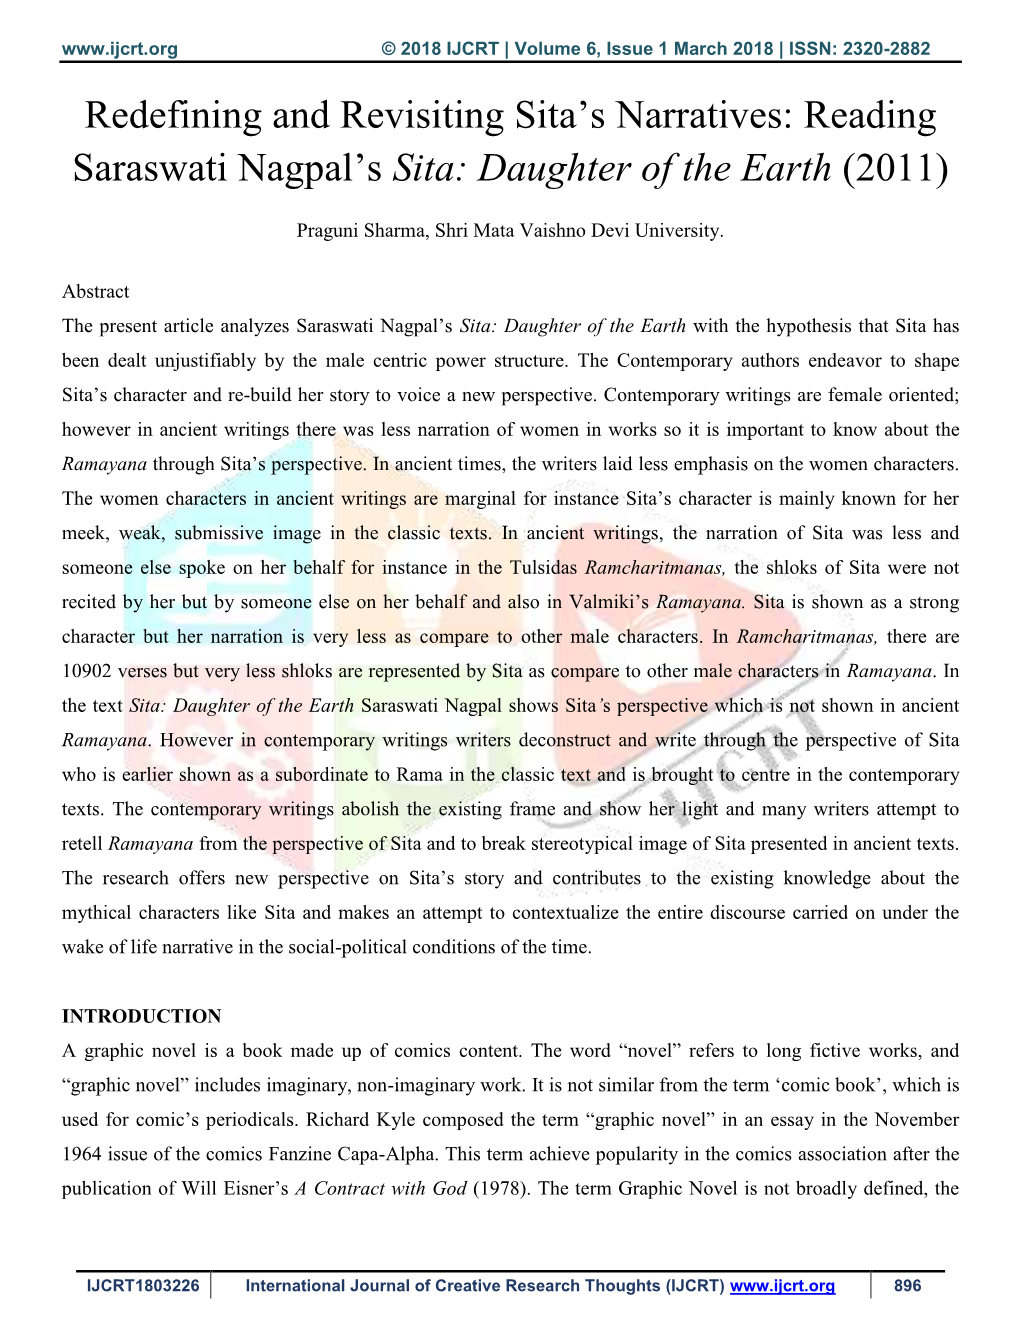 Reading Saraswati Nagpal's Sita